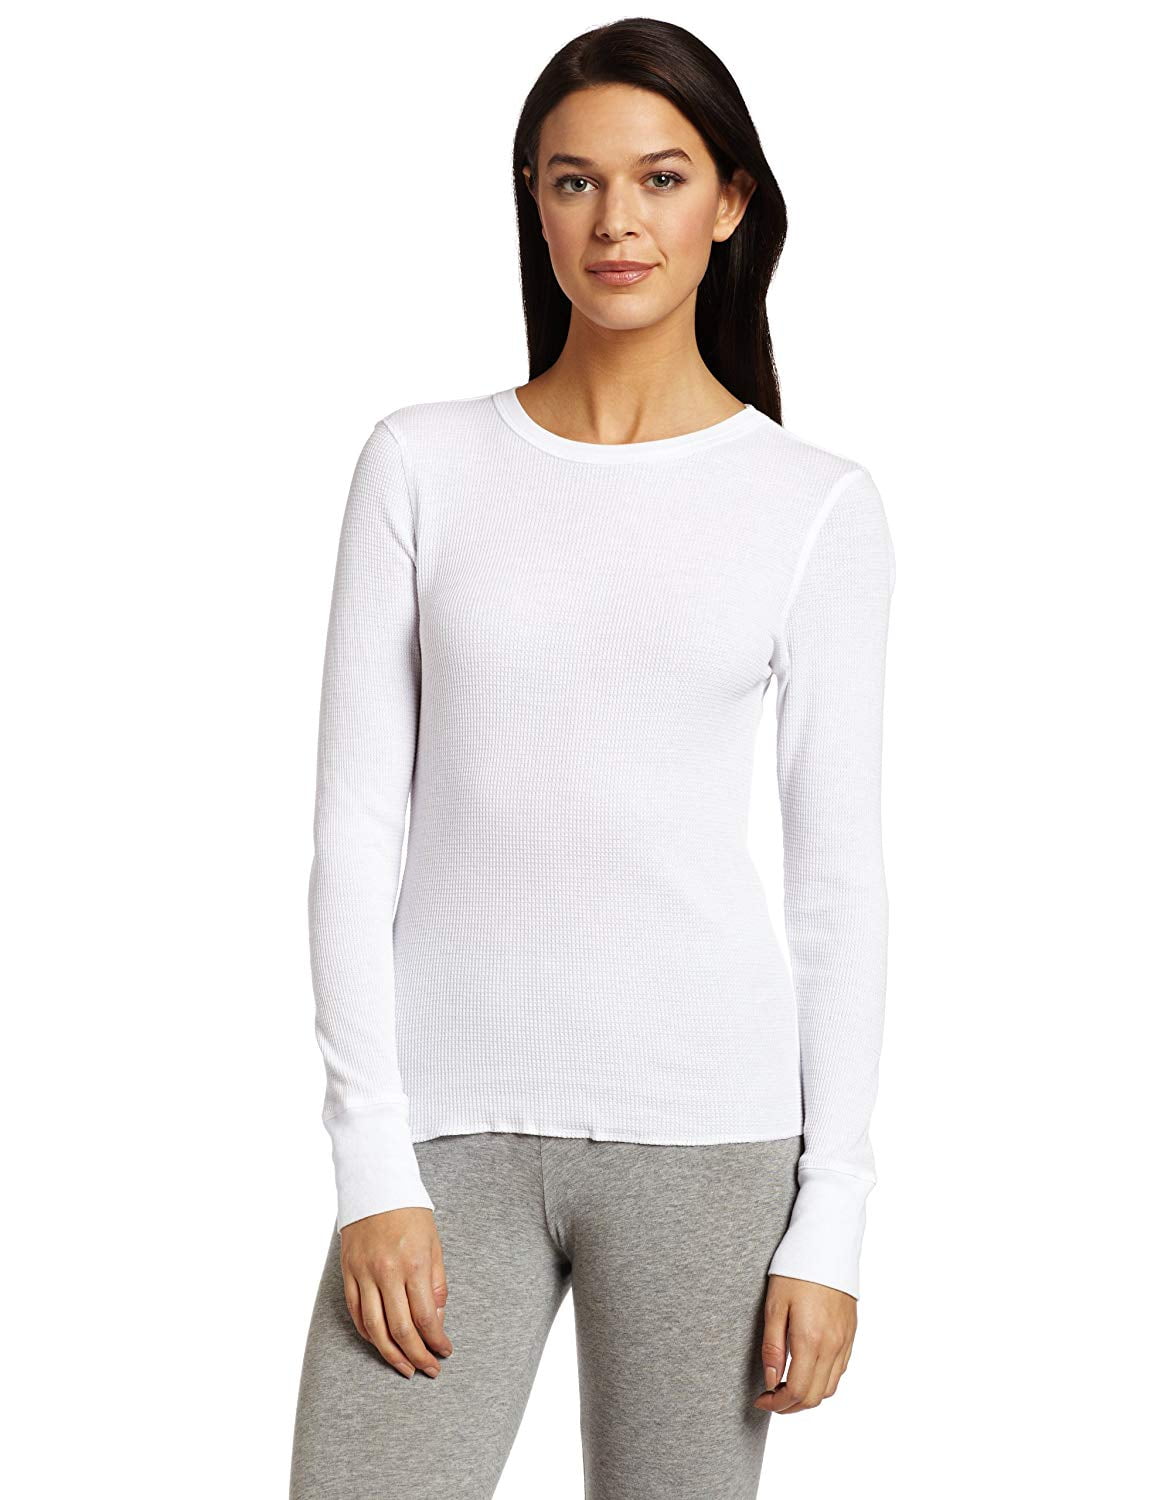 Intimo - Intimo Womens Thermal Long Sleeve Top, White, Medium - Walmart ...